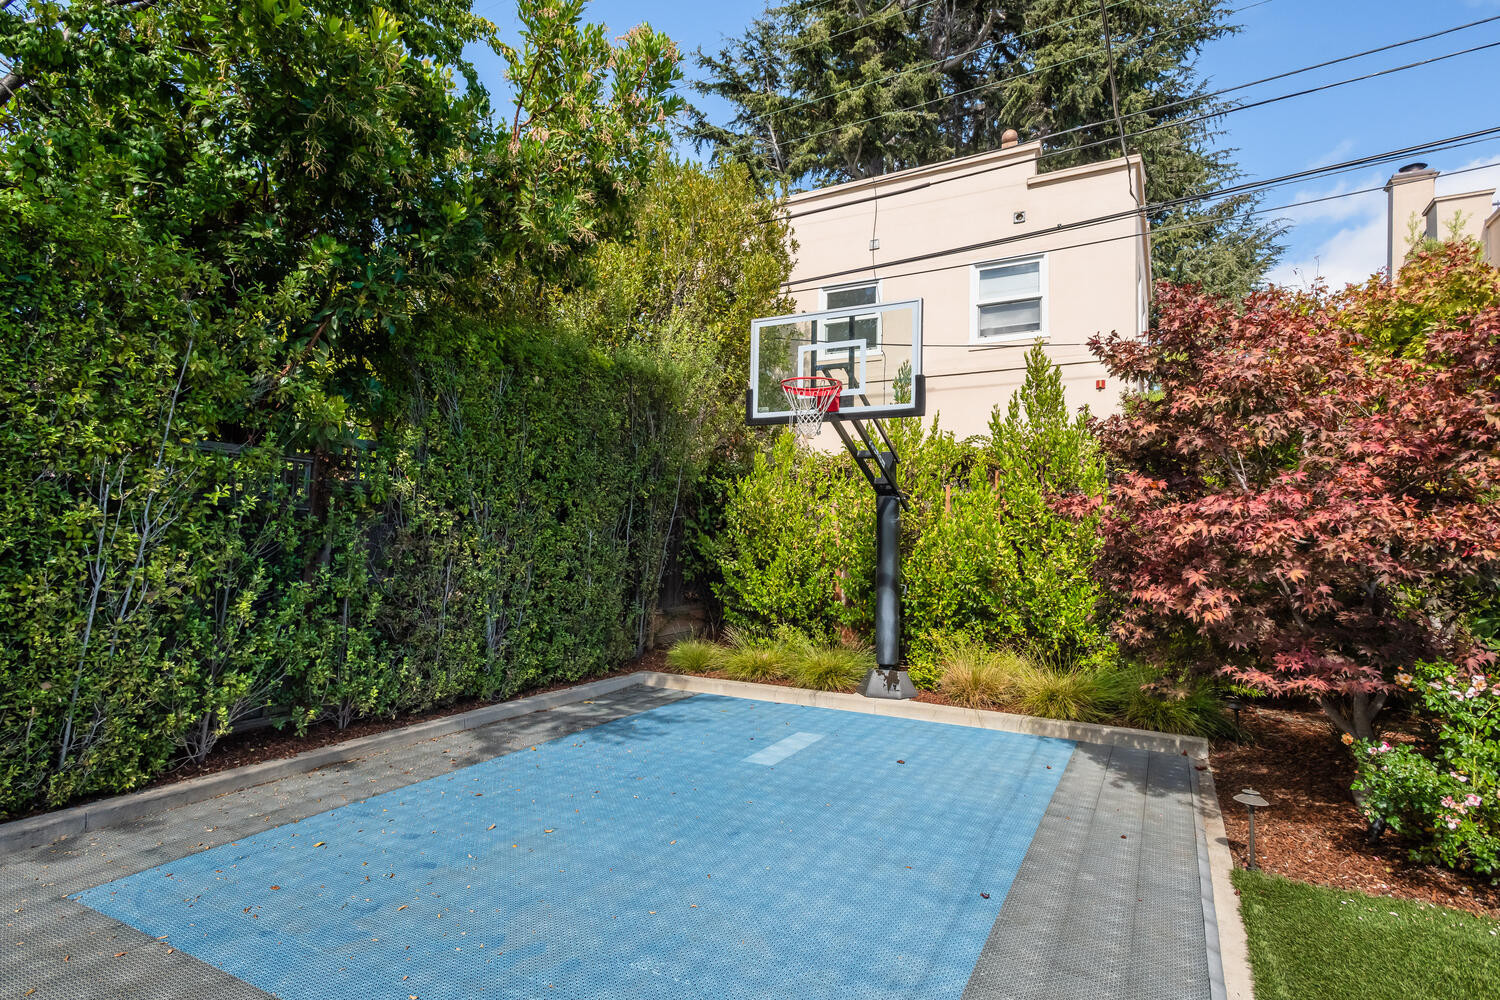 615 Harvard Basketball Hoop in Baywood area in San Mateo.